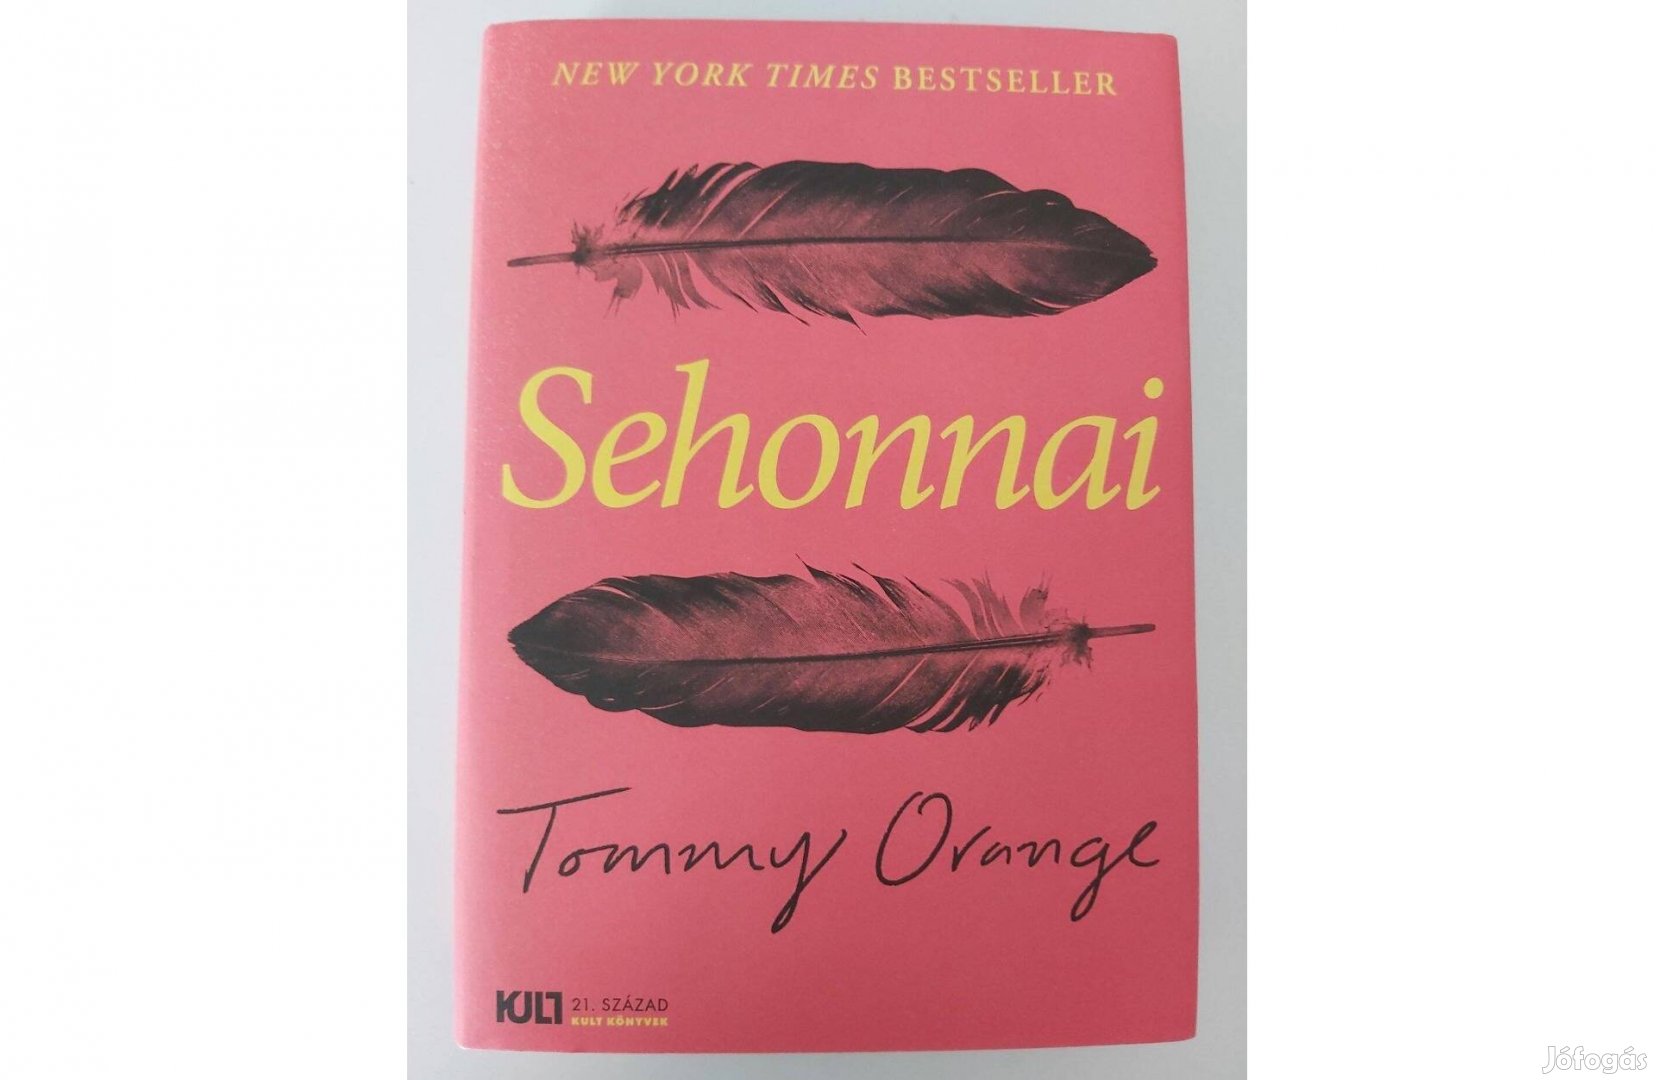 Tommy Orange: Sehonnai